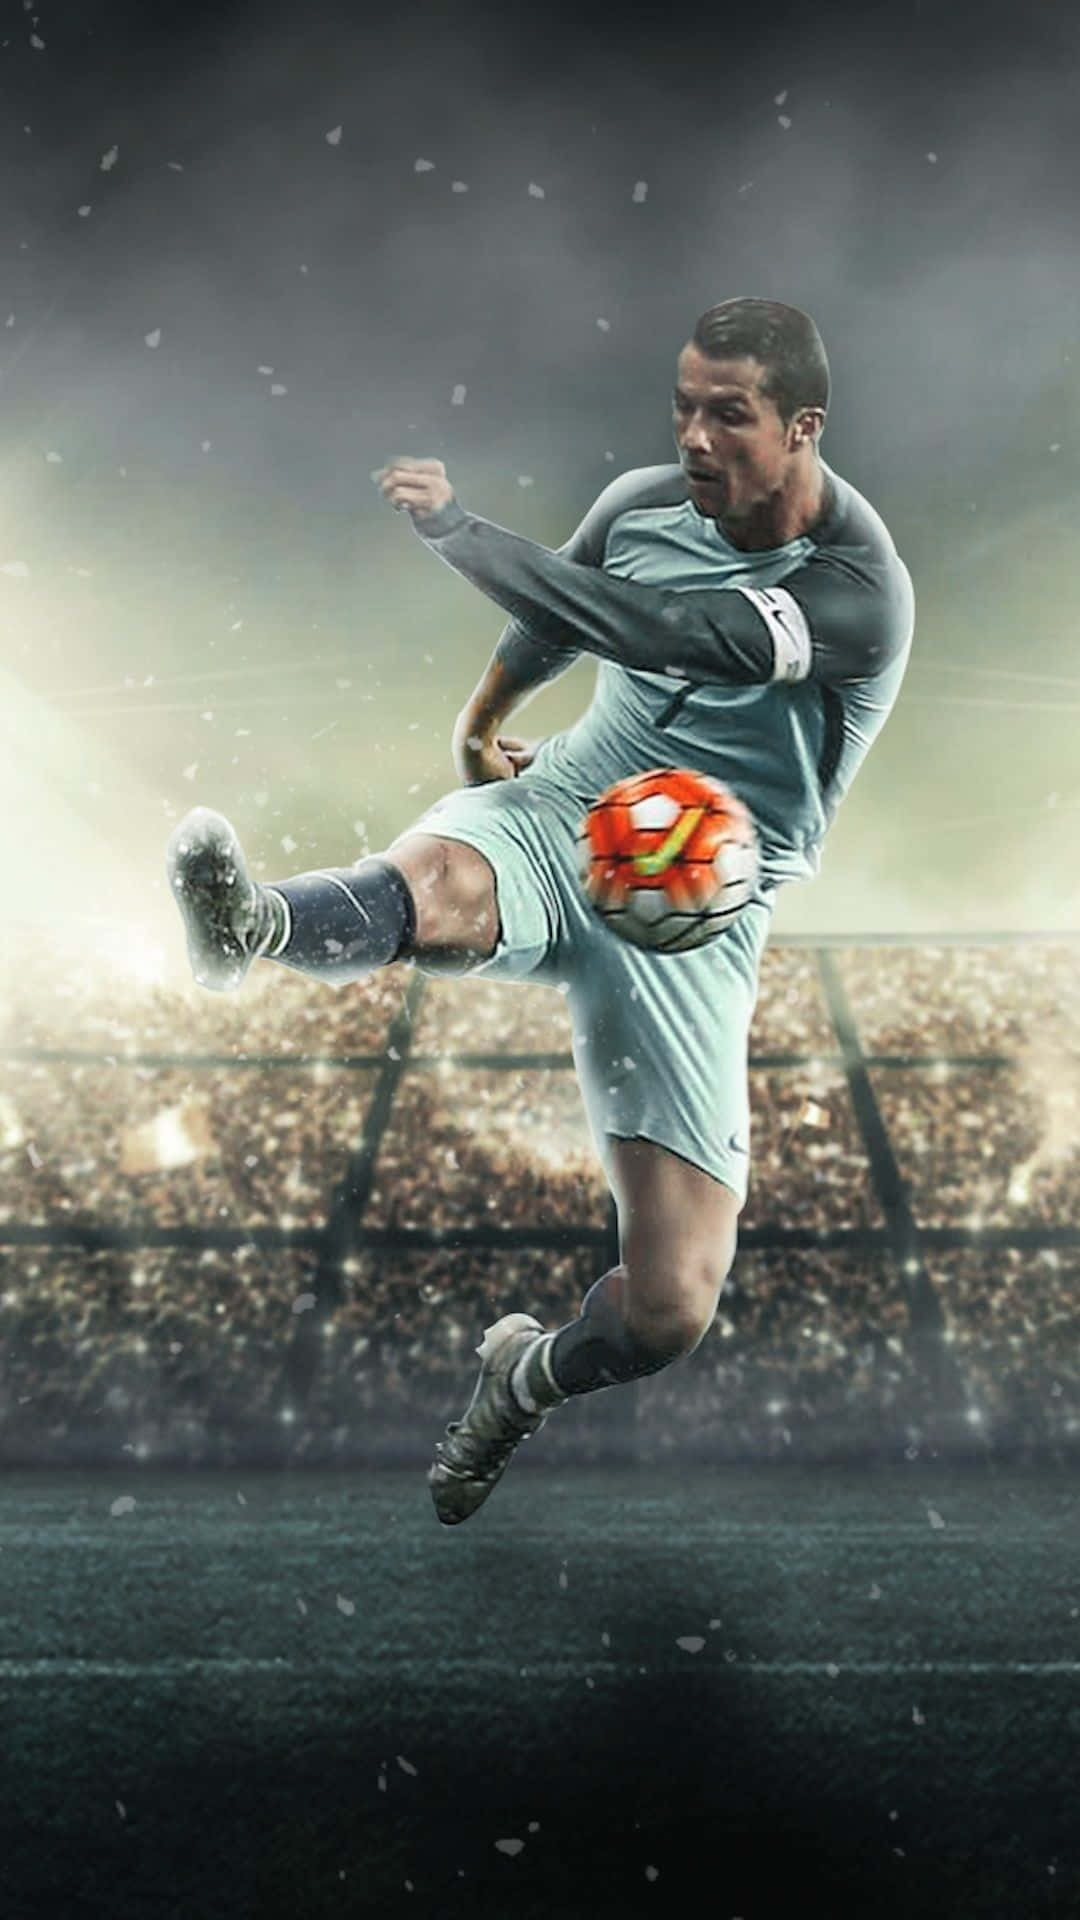 A Soccer Player Kicking A Ball In The Air